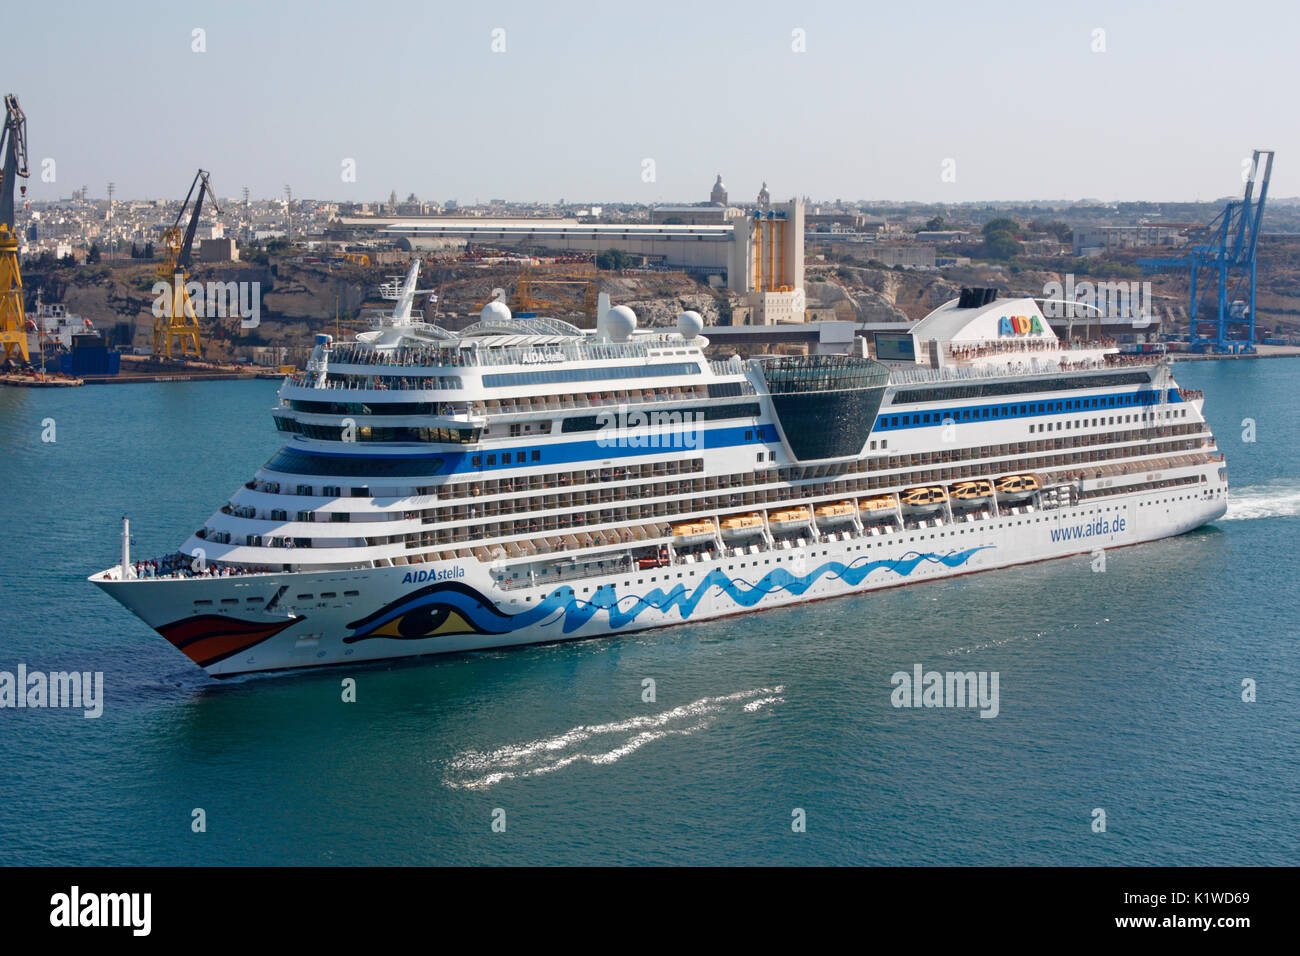 Cruising in the Mediterranean. The Aida Cruises cruise ship AIDAstella departing from Malta's Grand Harbour Stock Photo